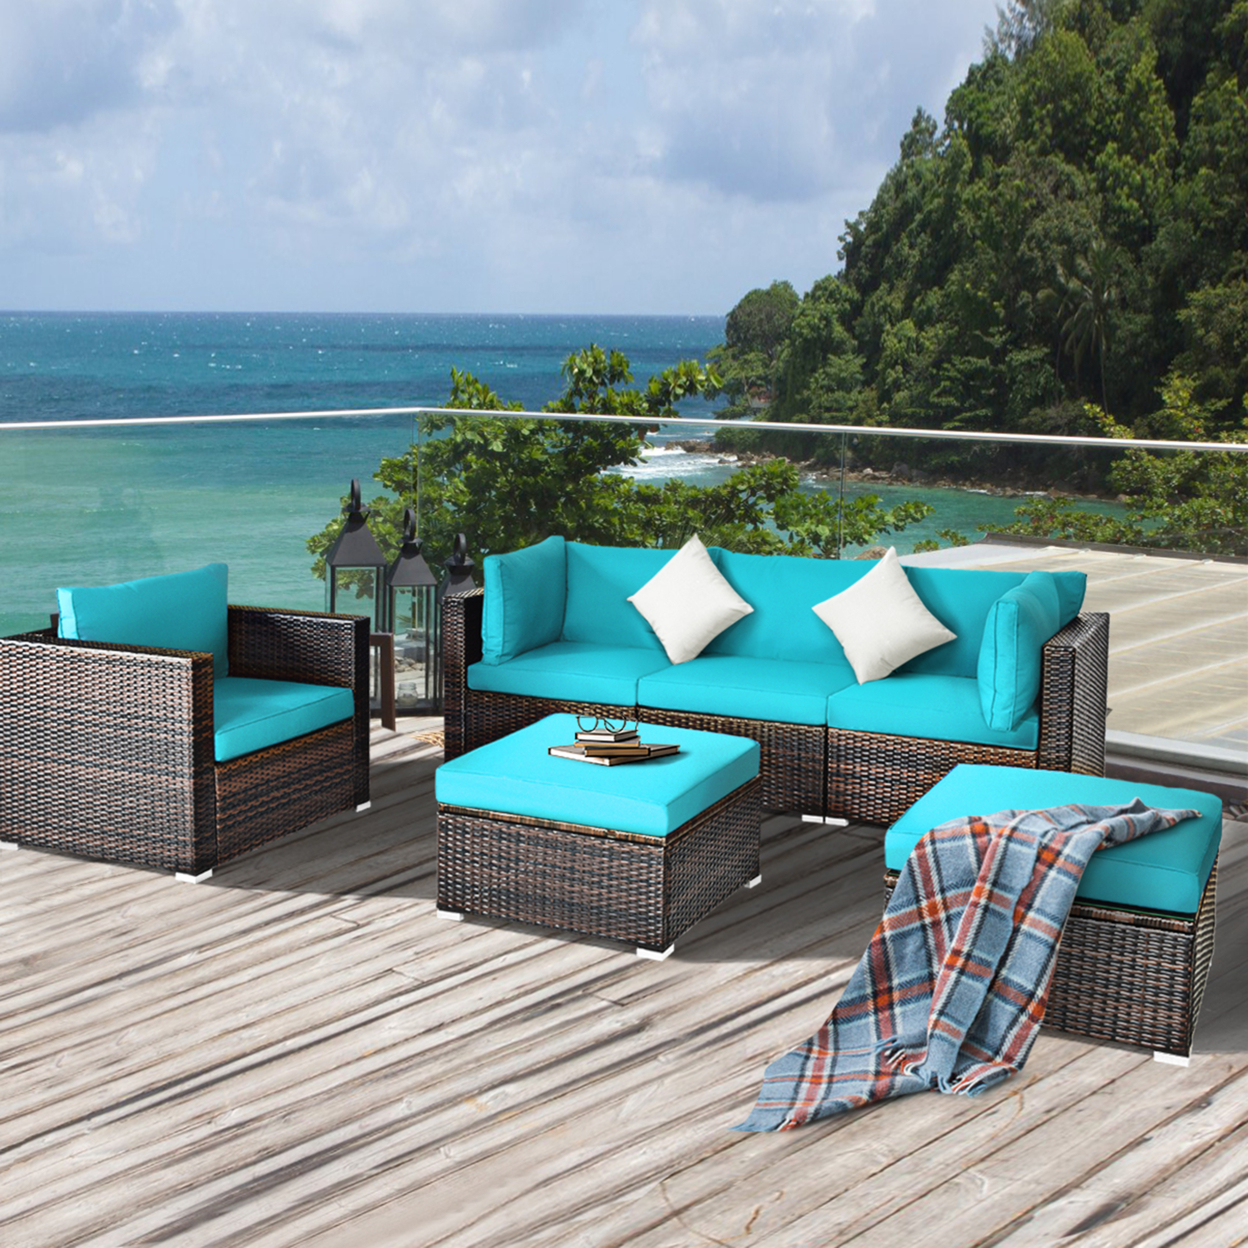 6PCS Patio Conversation Set Rattan Sectional Furniture Set W/ Turquoise Cushions